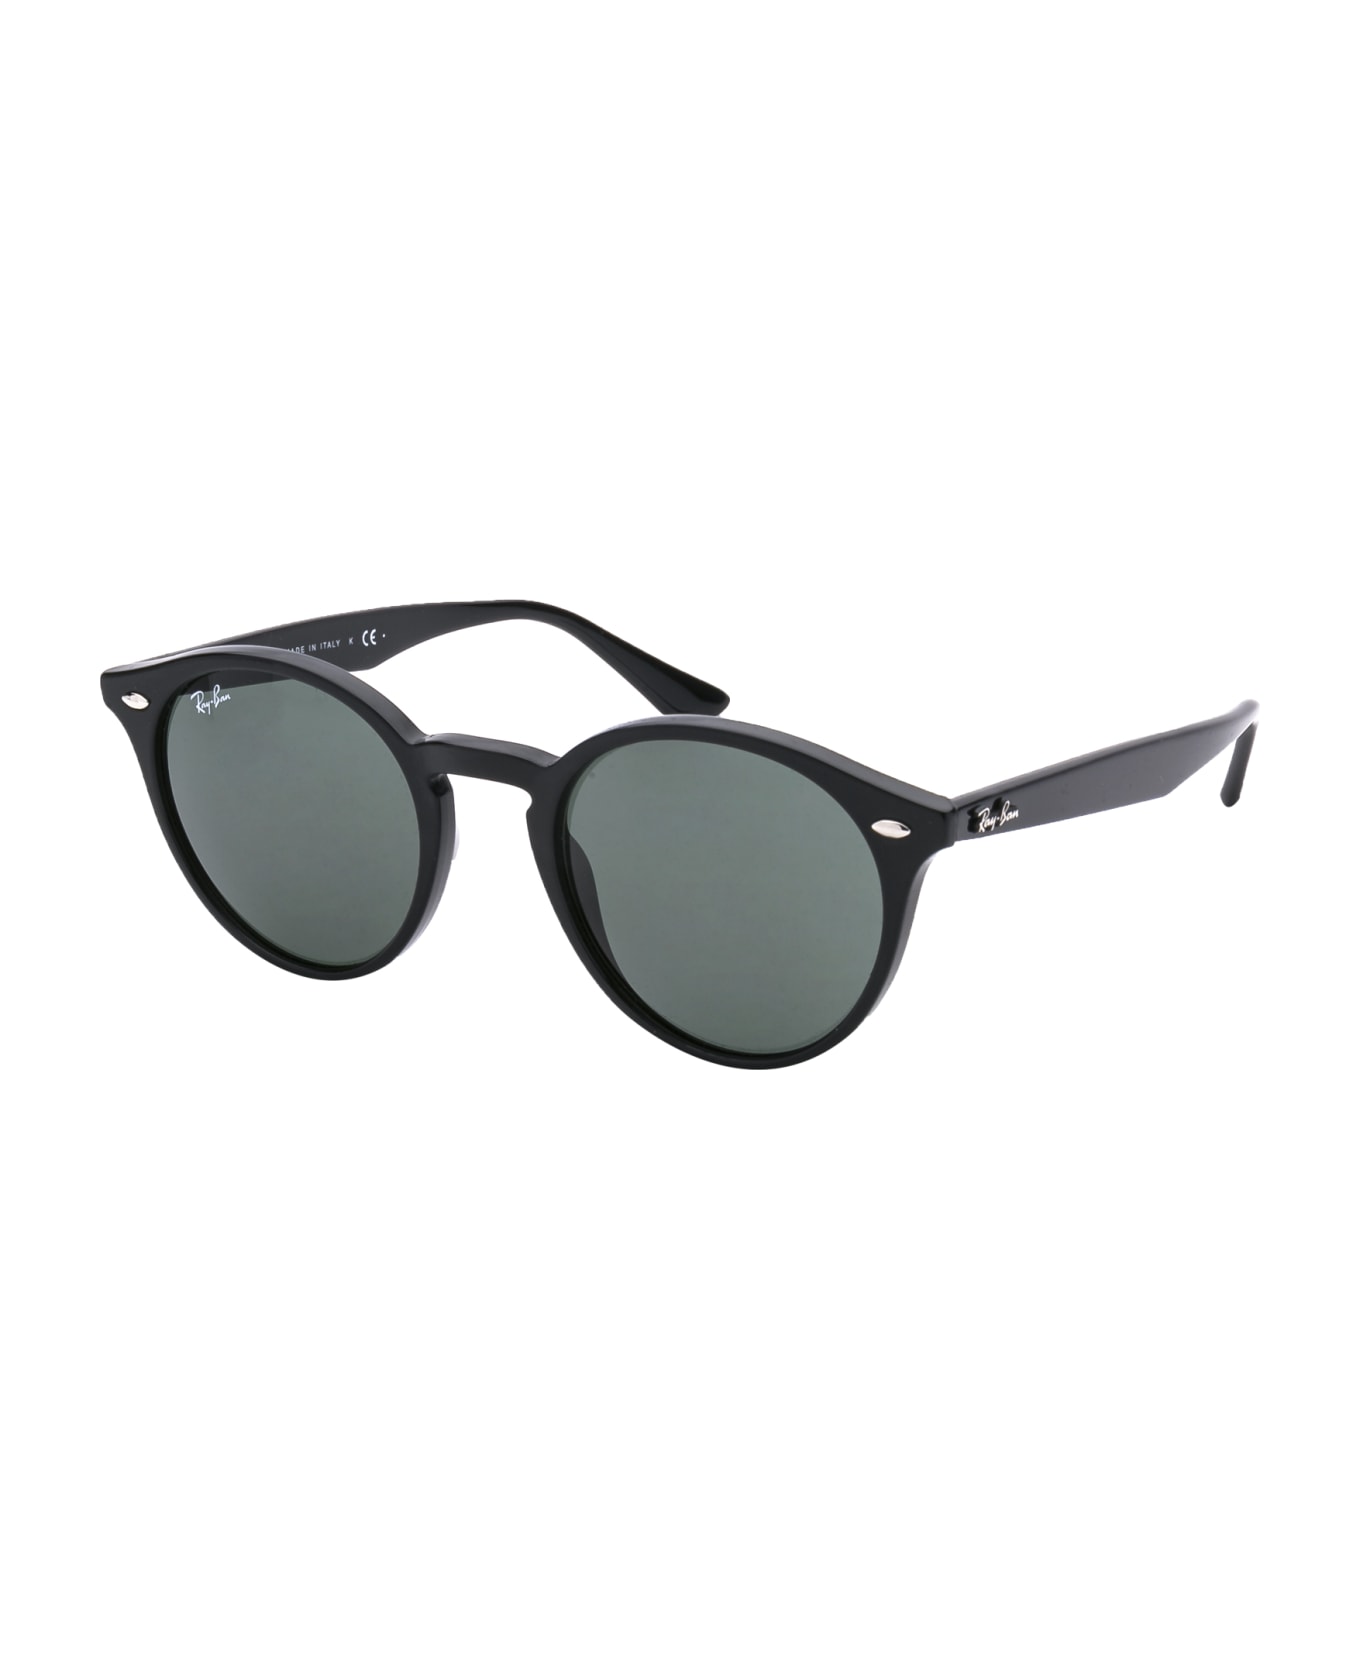 Ray-Ban 0rb2180 Sunglasses - 601/71 BLACK